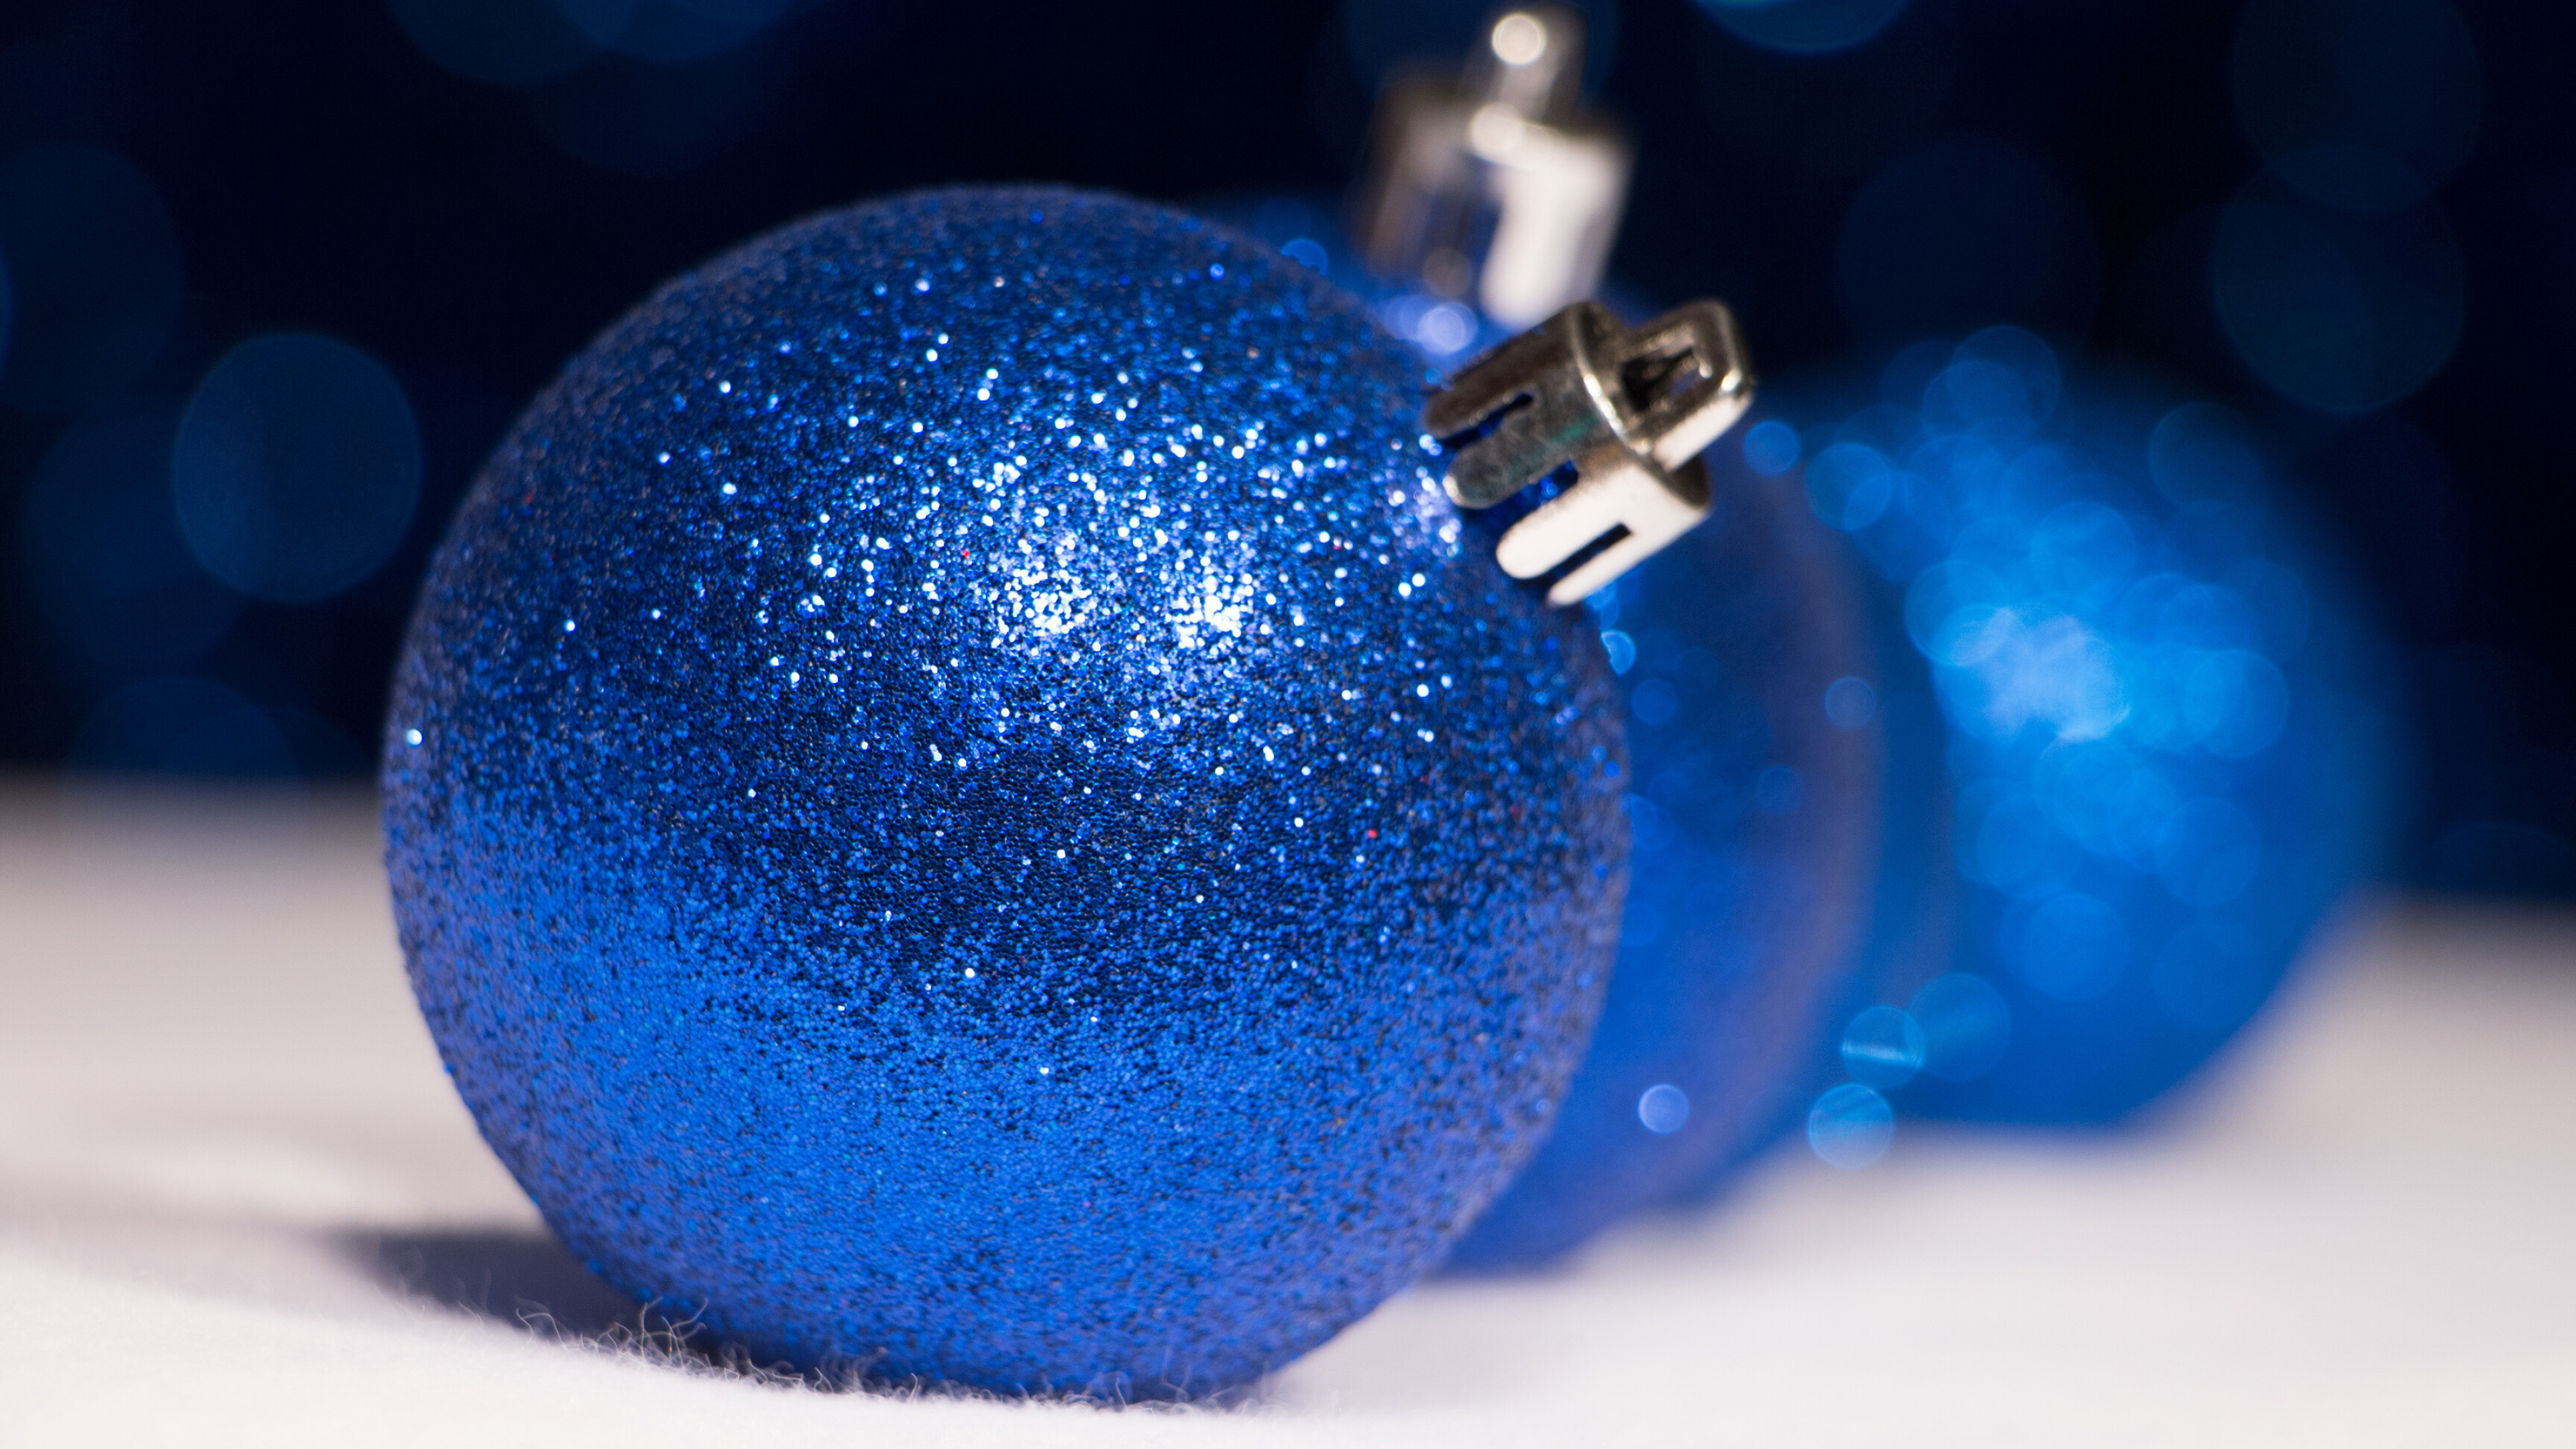 Christmas Ornament: Sparkly blue Xstmas ornaments, Ball. 3840x2160 4K Background.